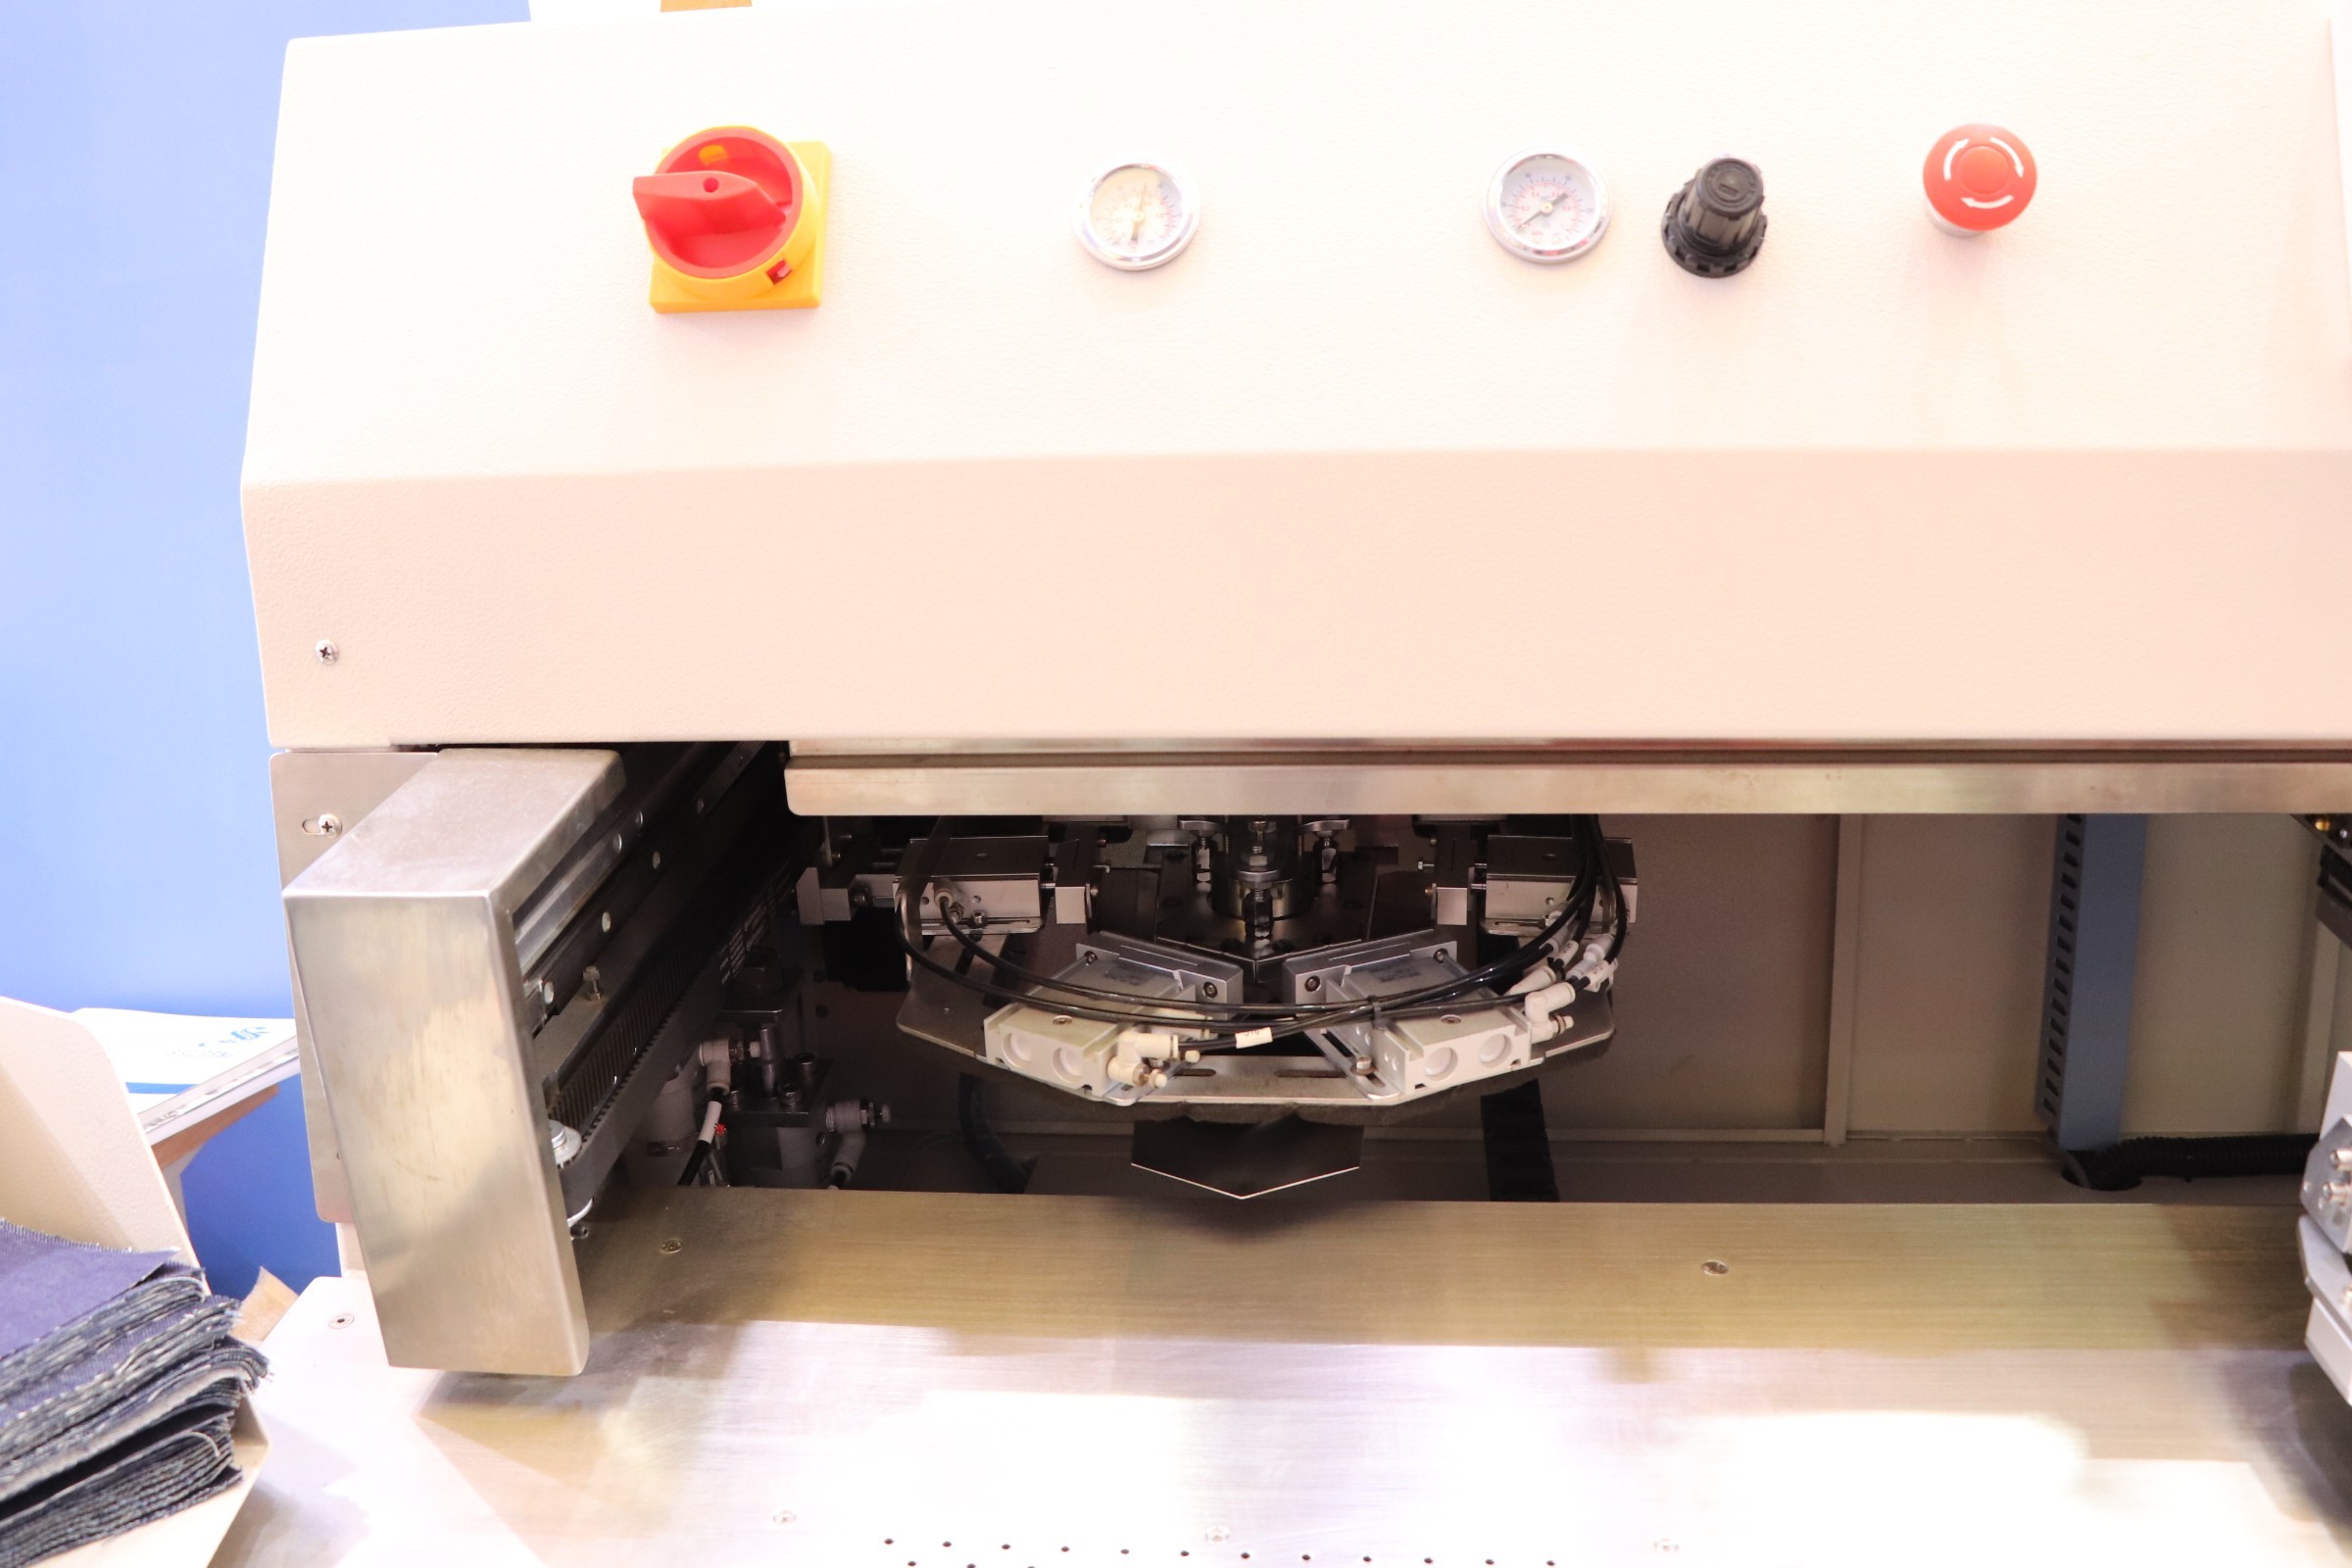 ZY9000TDB Automatic CNC Attaching Pocket Sewing Machine